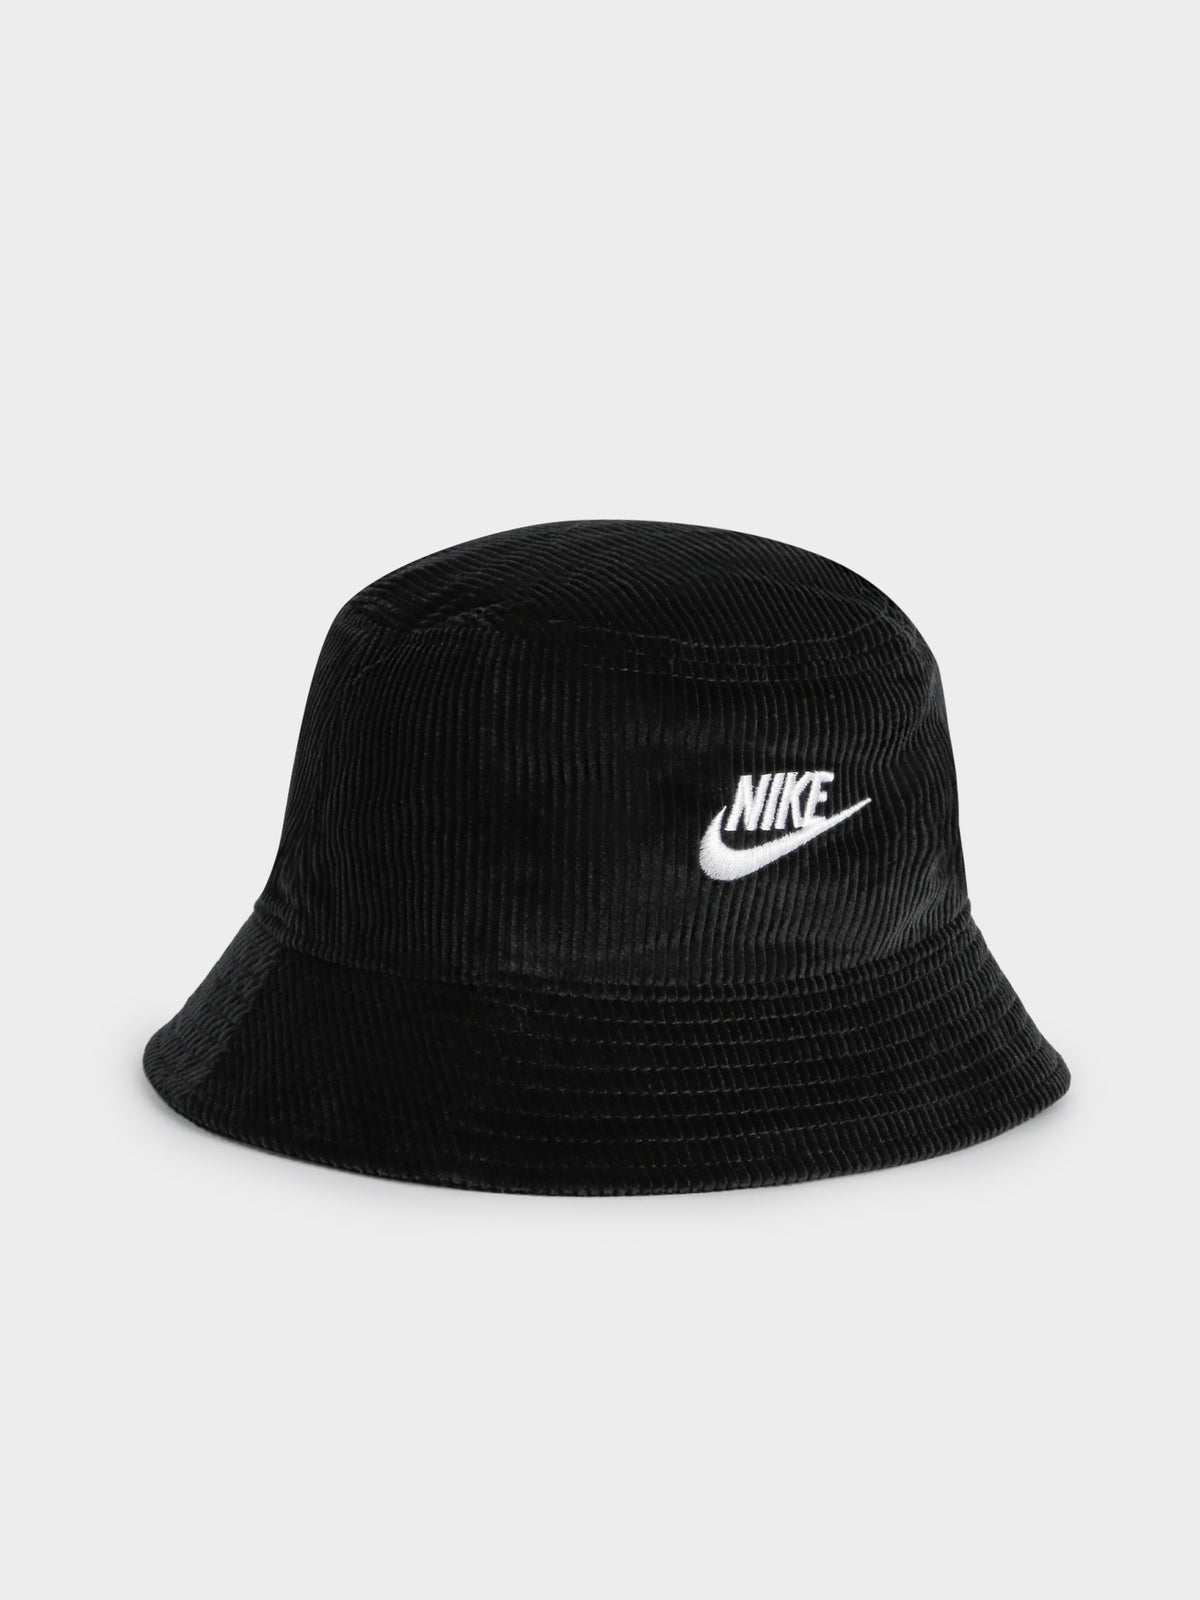 Futura Bucket Hat in Black Corduroy